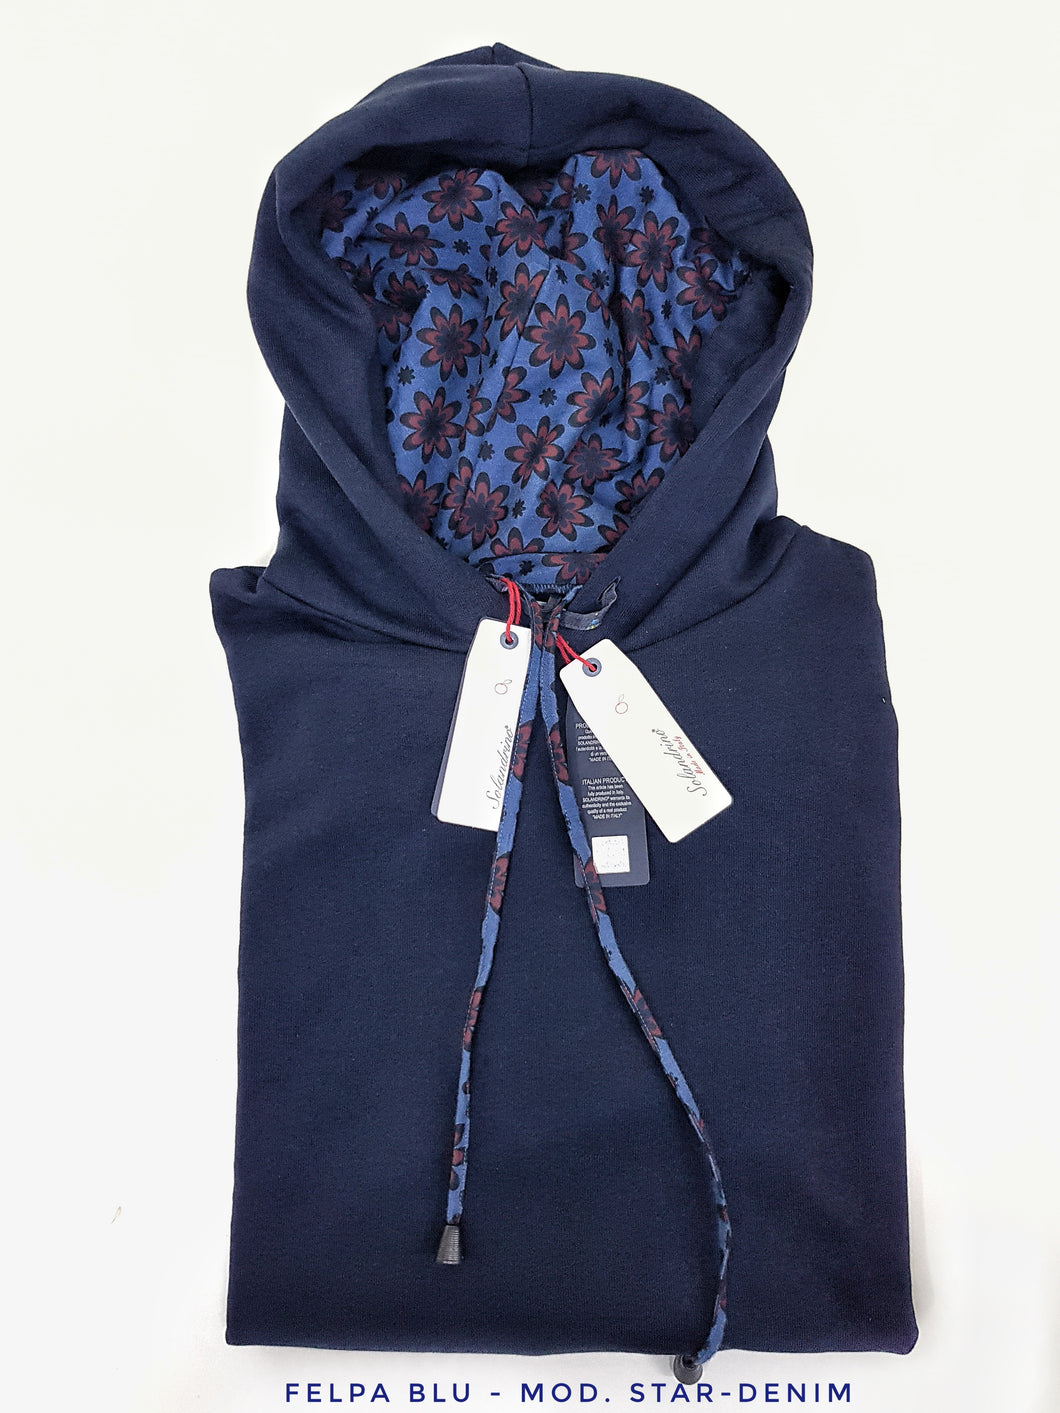 Felpa Blu con Cappuccio Design star denim made in Italy Fantasia  100% cotone -  UNISEX Sweatshirt Blue hoodie